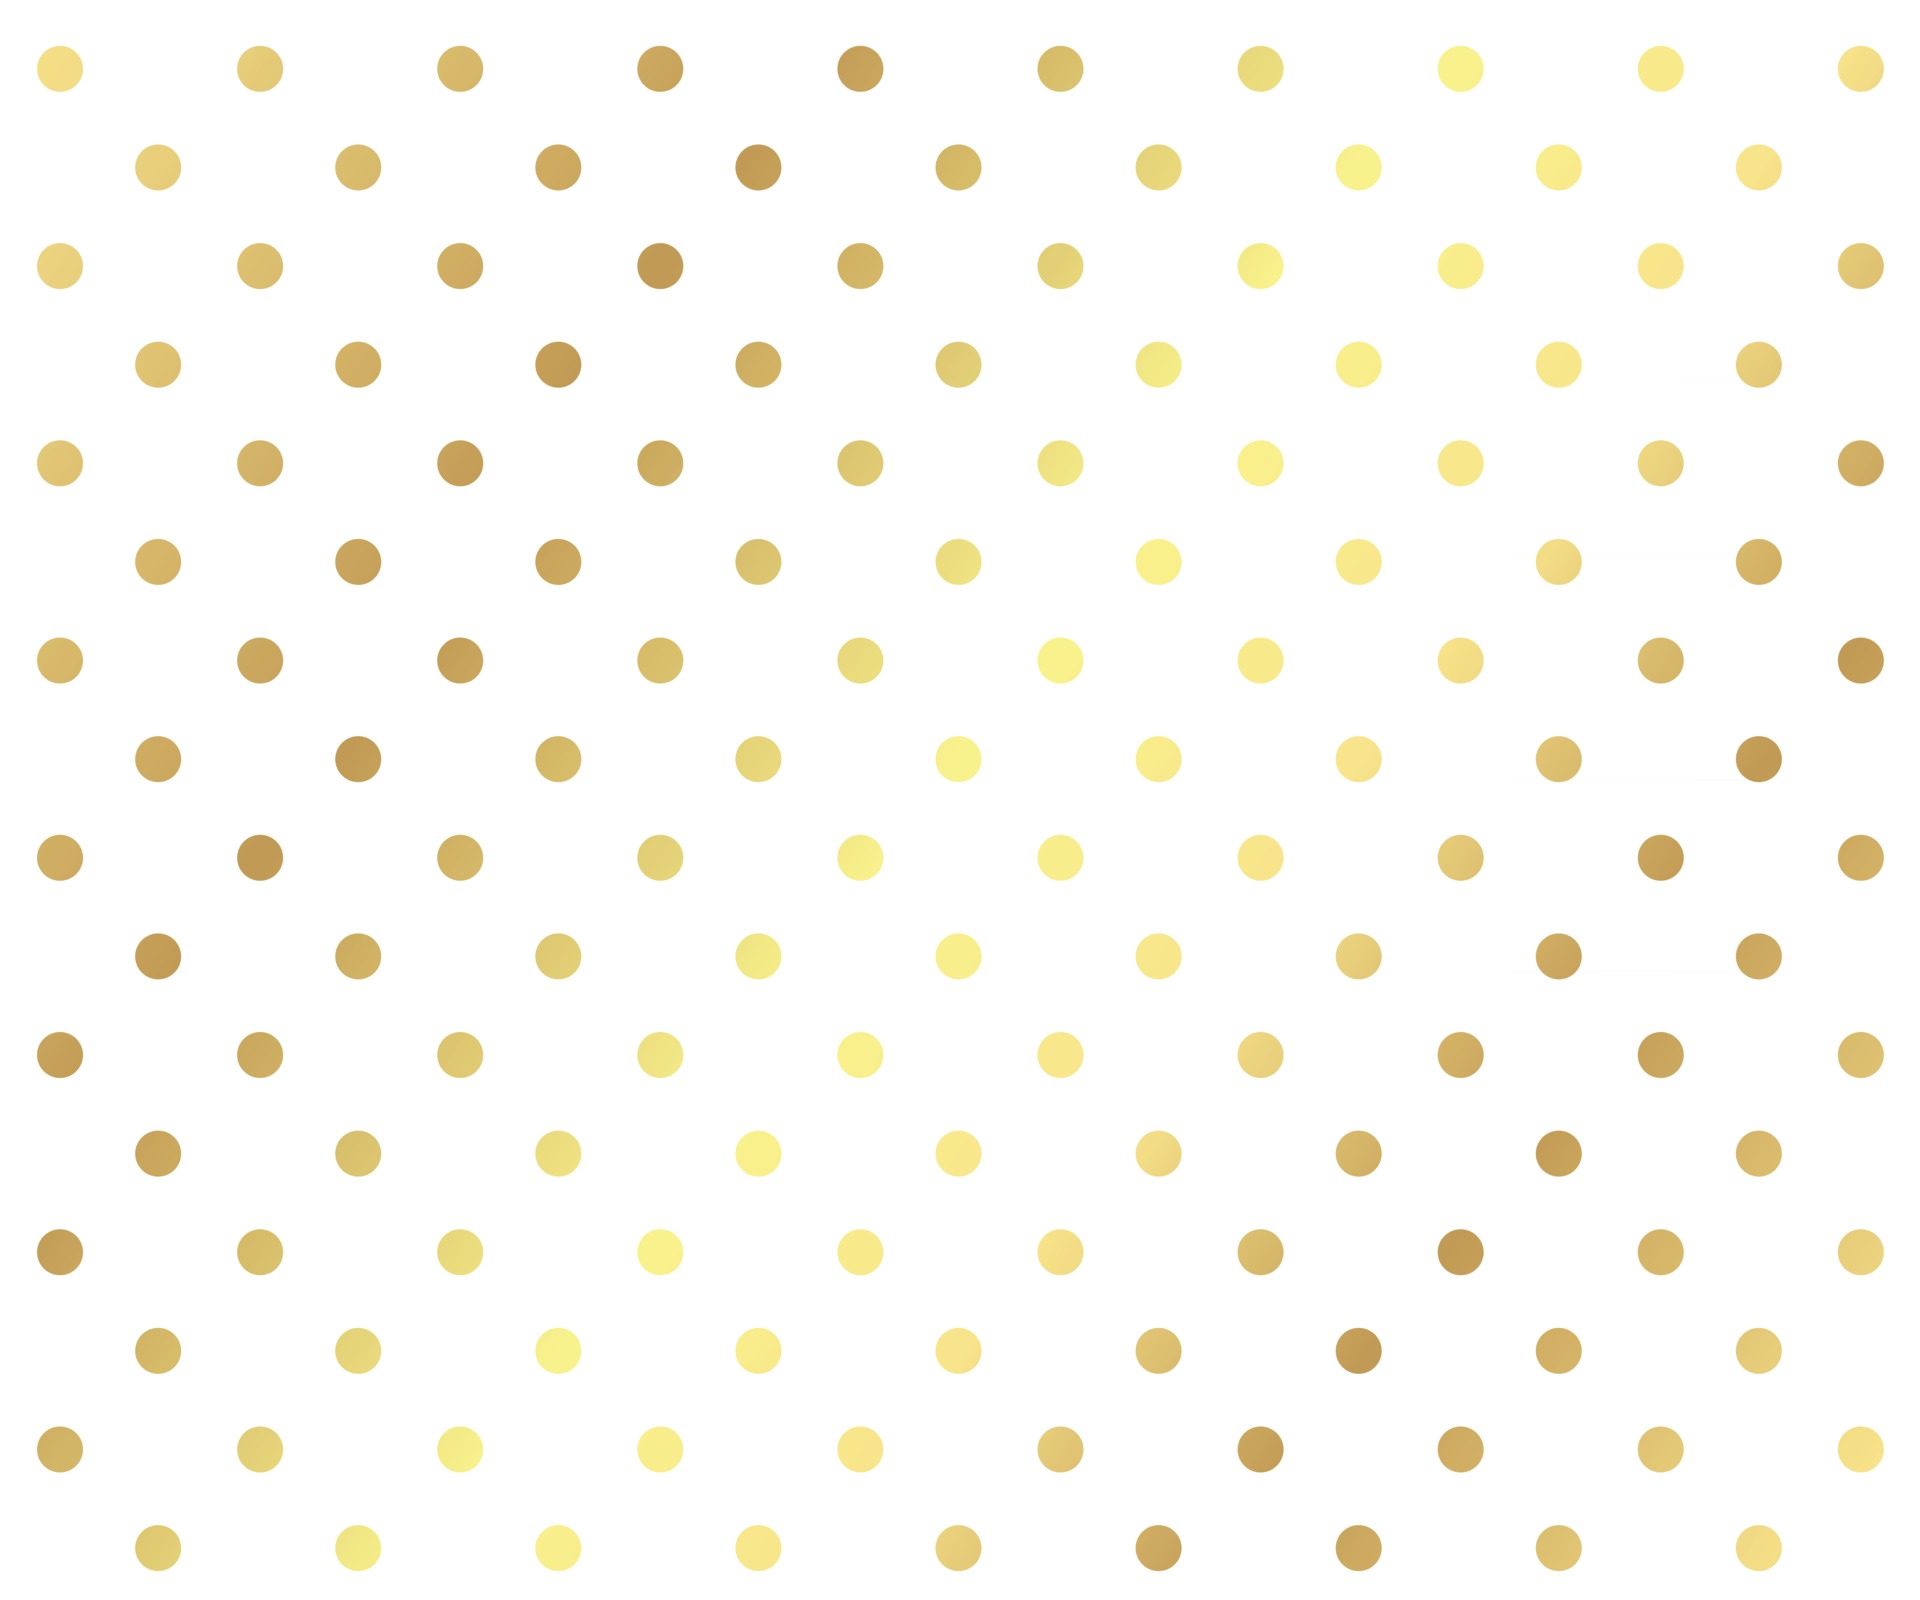 Free Vector  Gold polka dot glittery pattern background